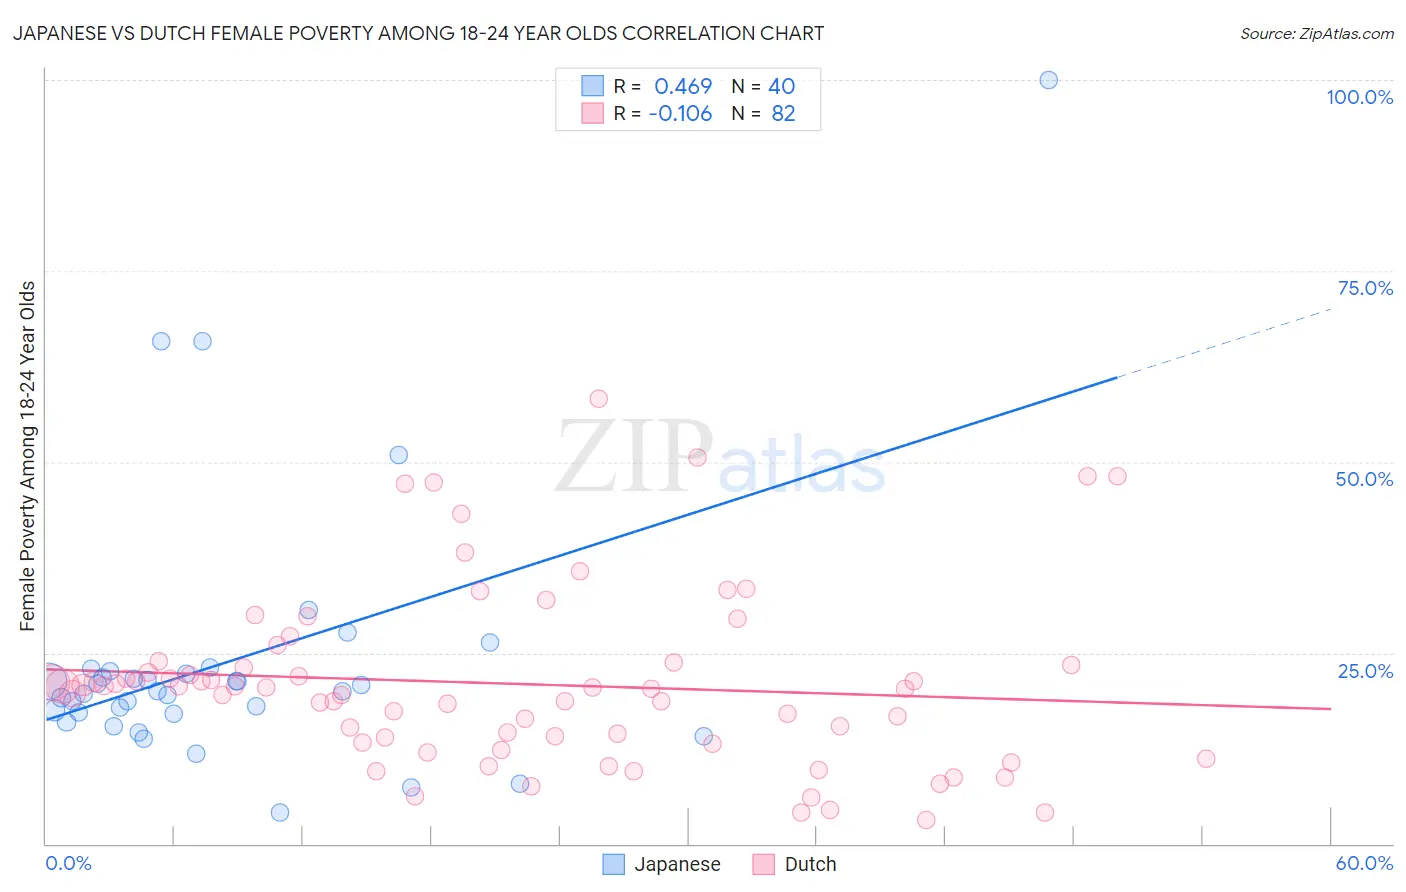 Japanese vs Dutch Female Poverty Among 18-24 Year Olds